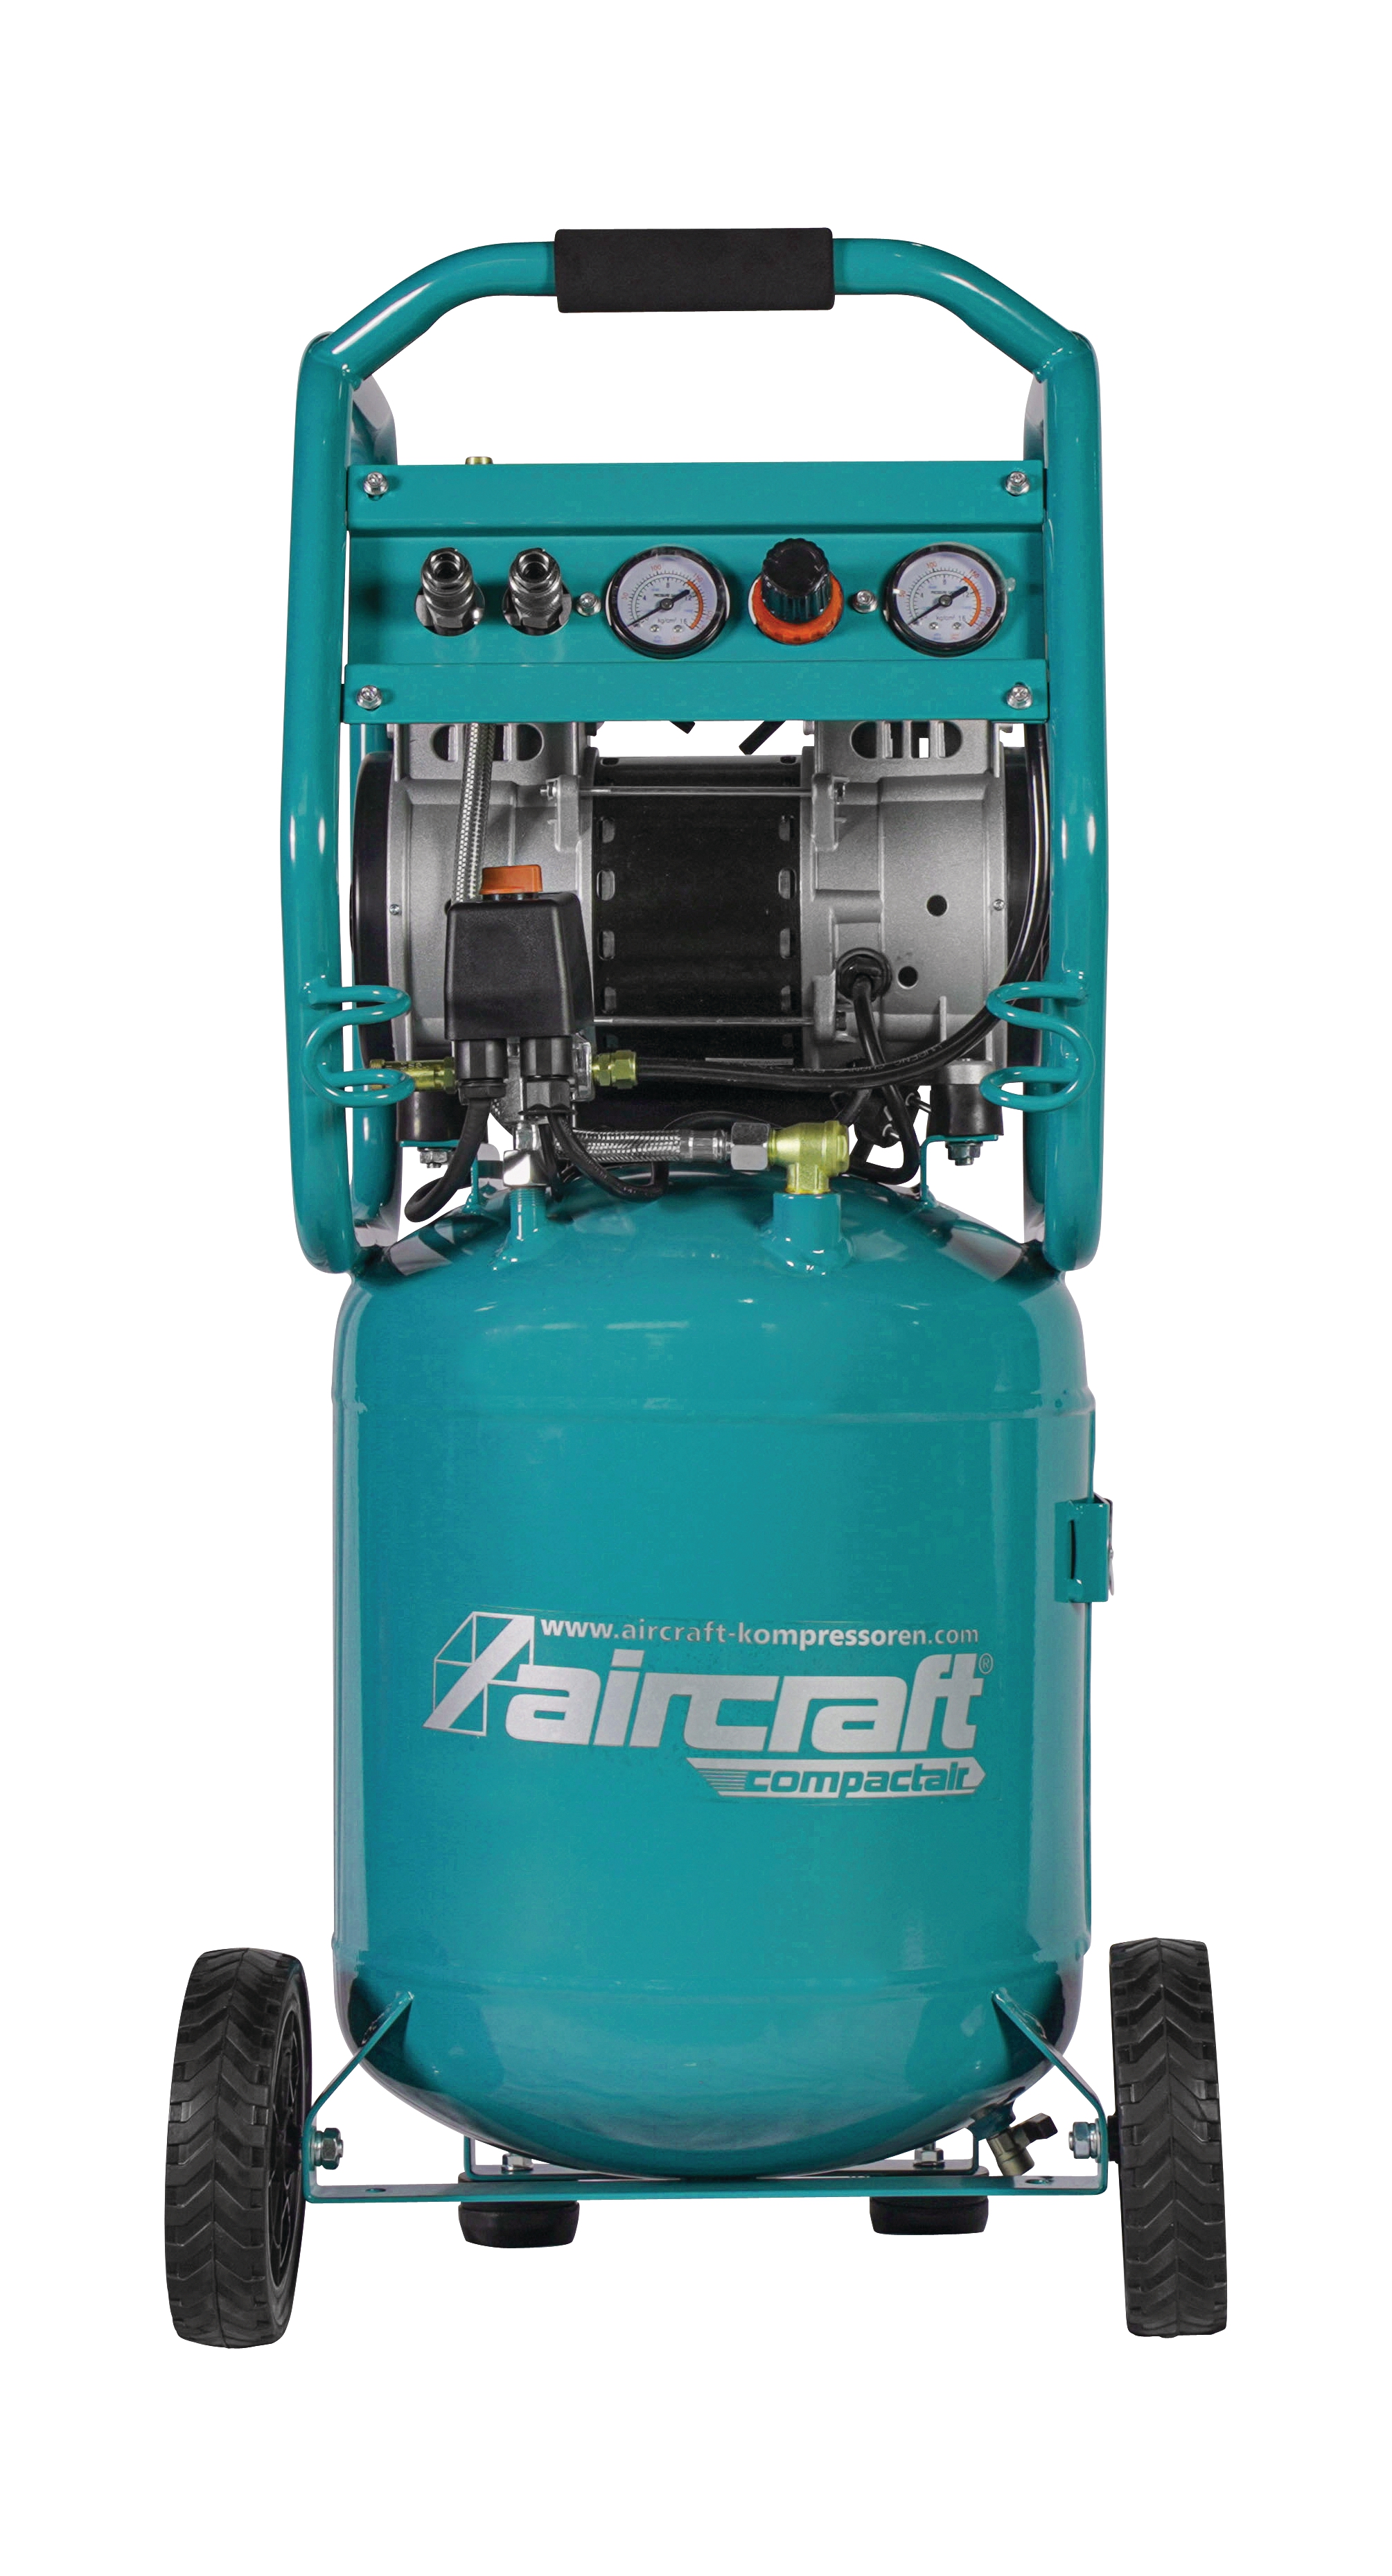 AIRCRAFT Kompressor COMPACT-AIR 240/40 V OF E | Ölfrei & Leise mit stehendem Kessel